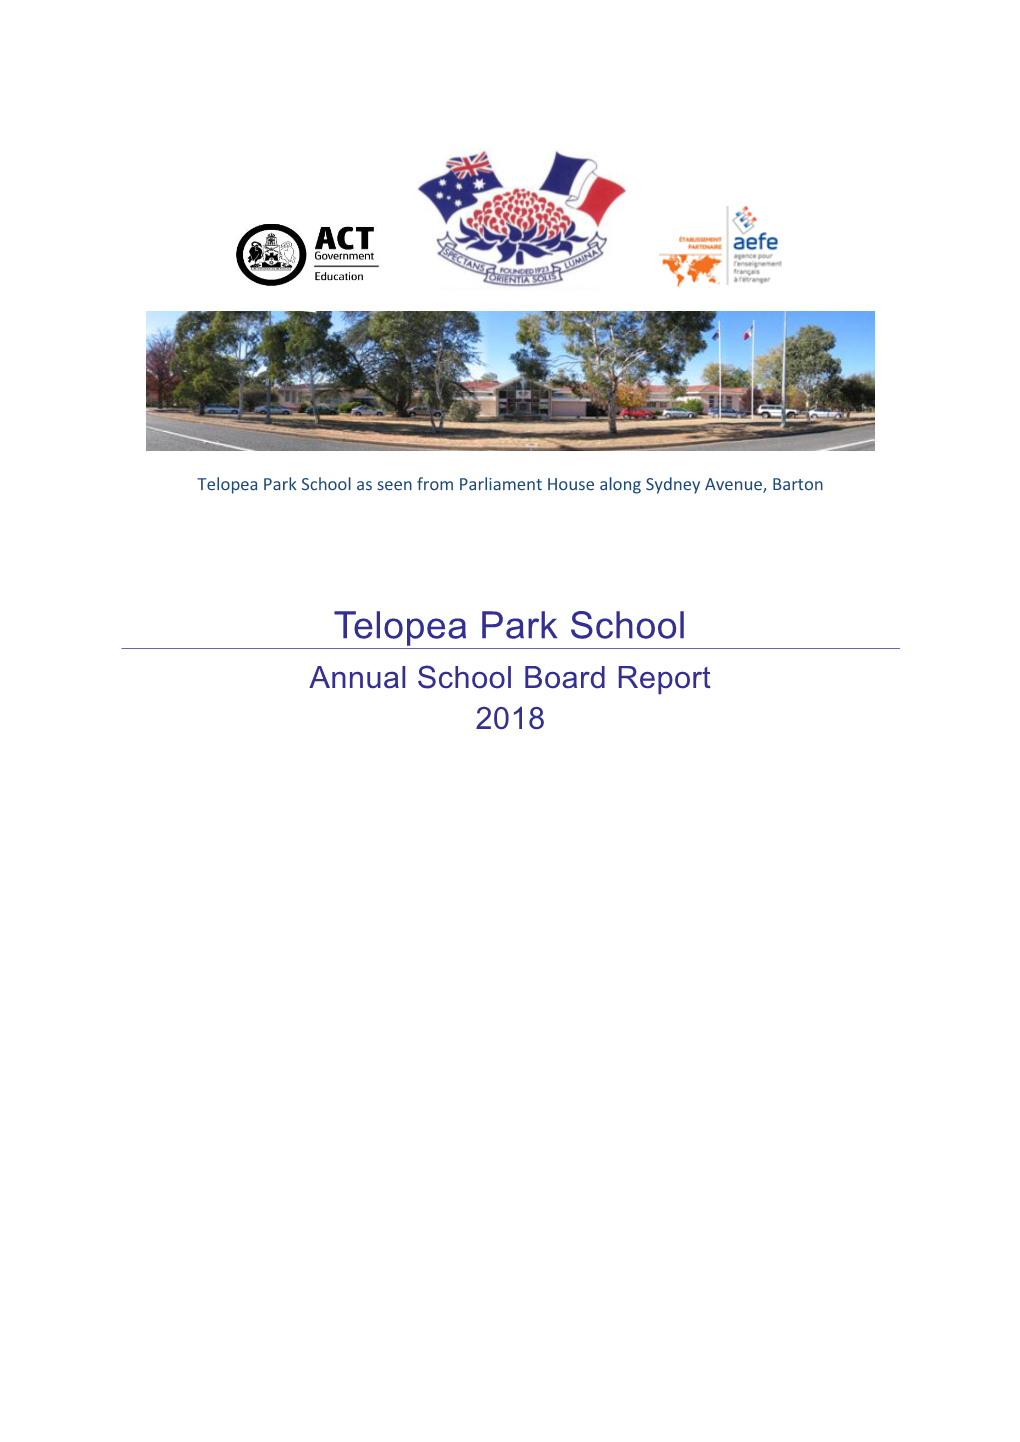 Telopea Park School As Seen from Parliament House Along Sydney Avenue, Barton